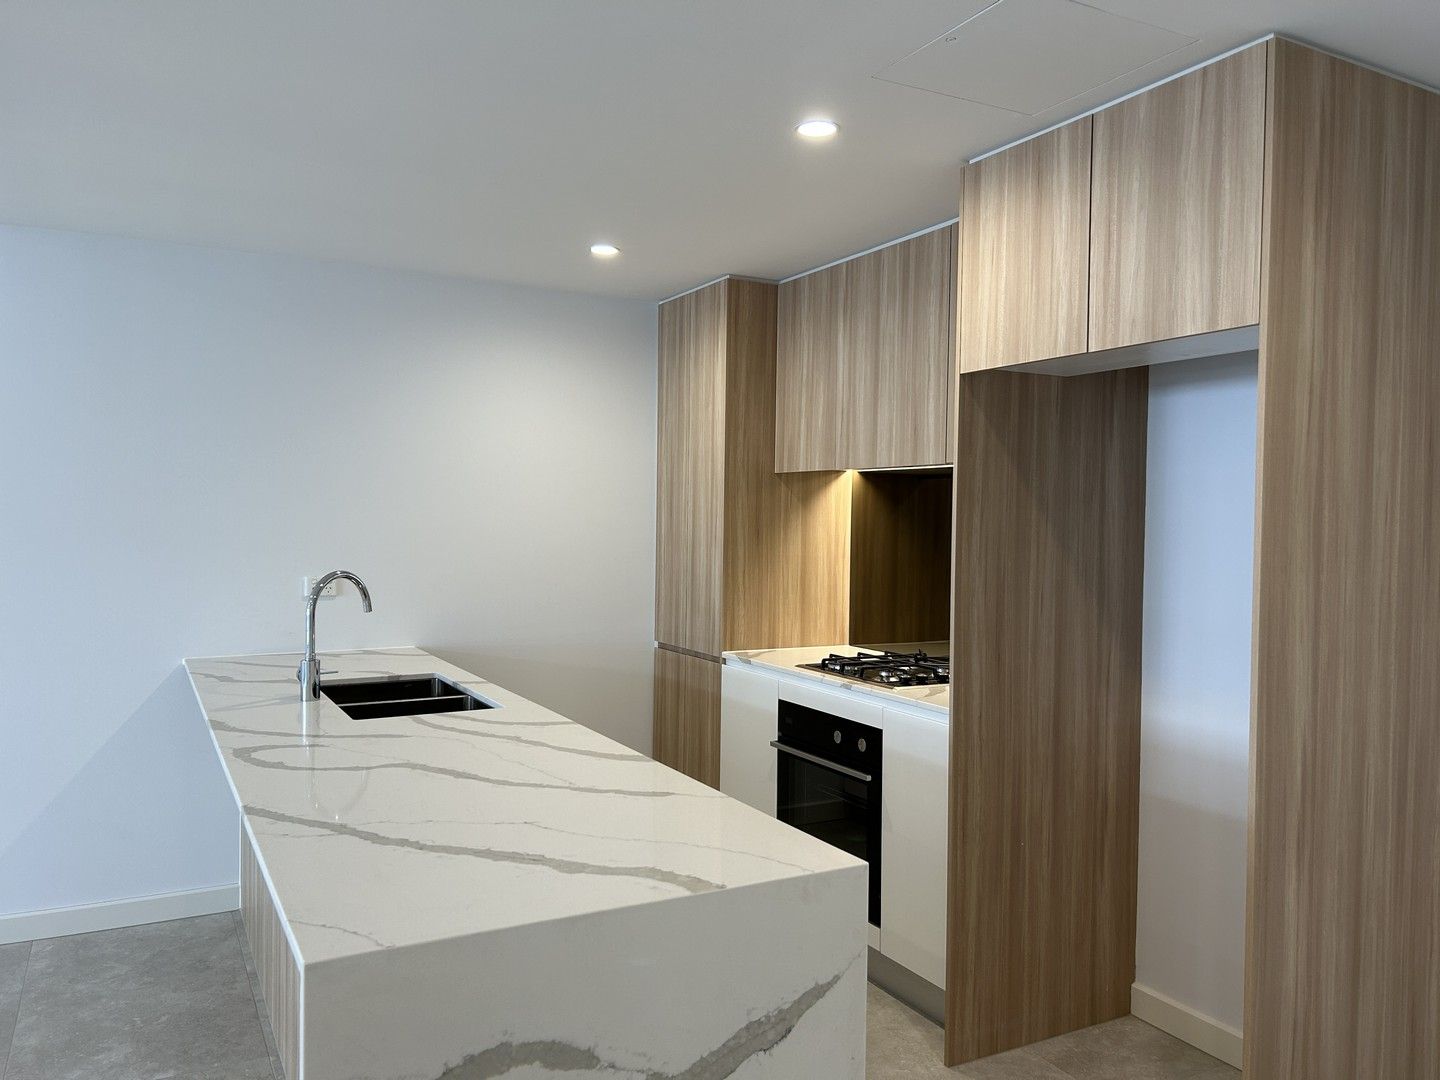 2 bedrooms Apartment / Unit / Flat in 138/129C Jerralong Drive SCHOFIELDS NSW, 2762